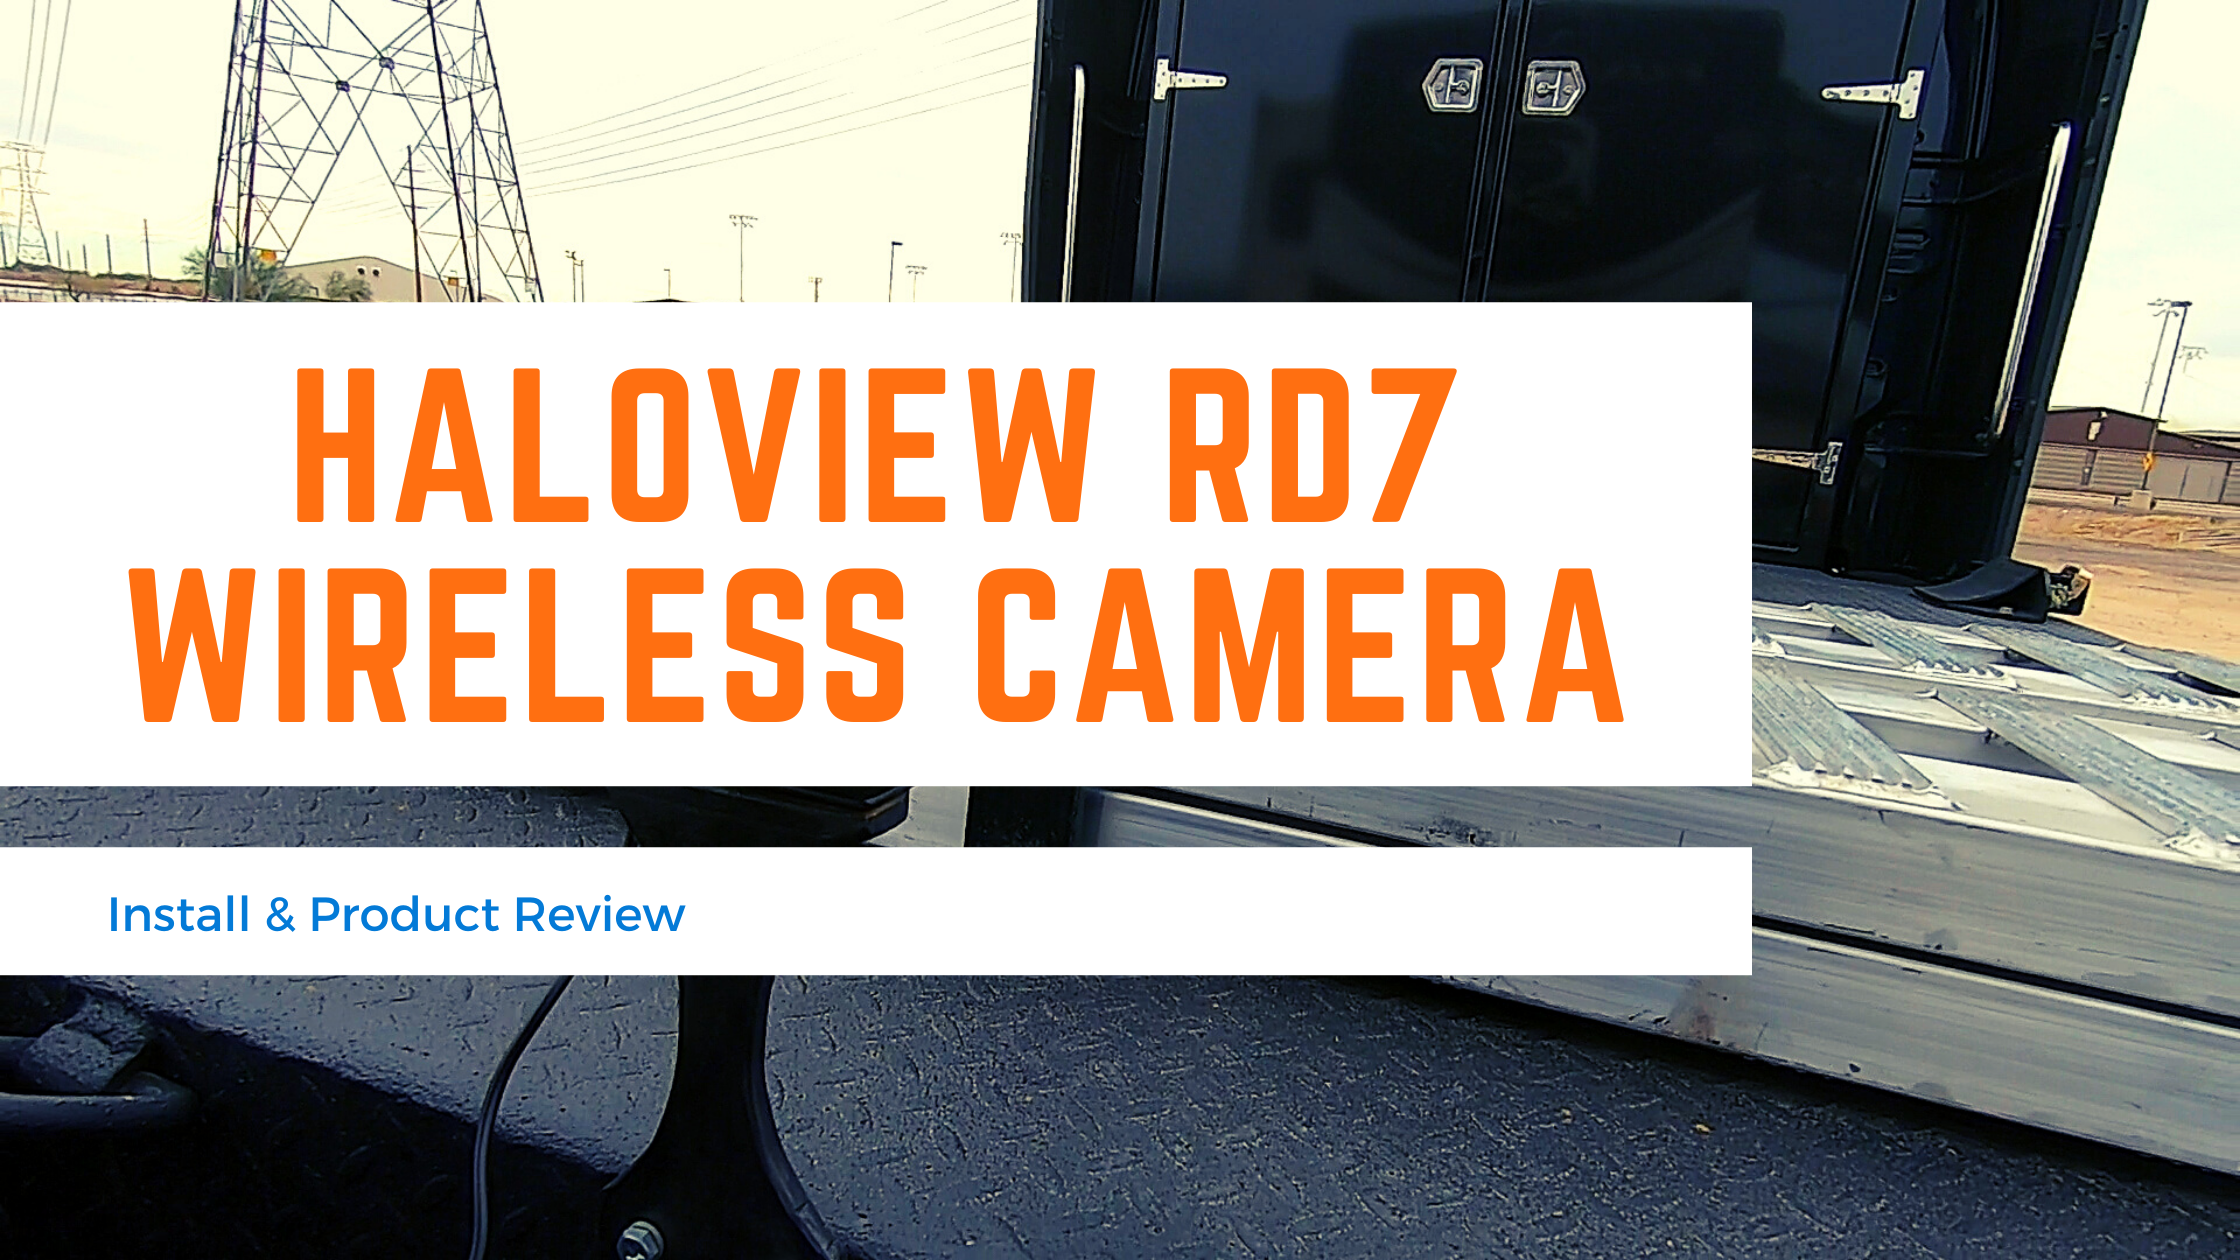 Haloview RD7 Wireless Camera